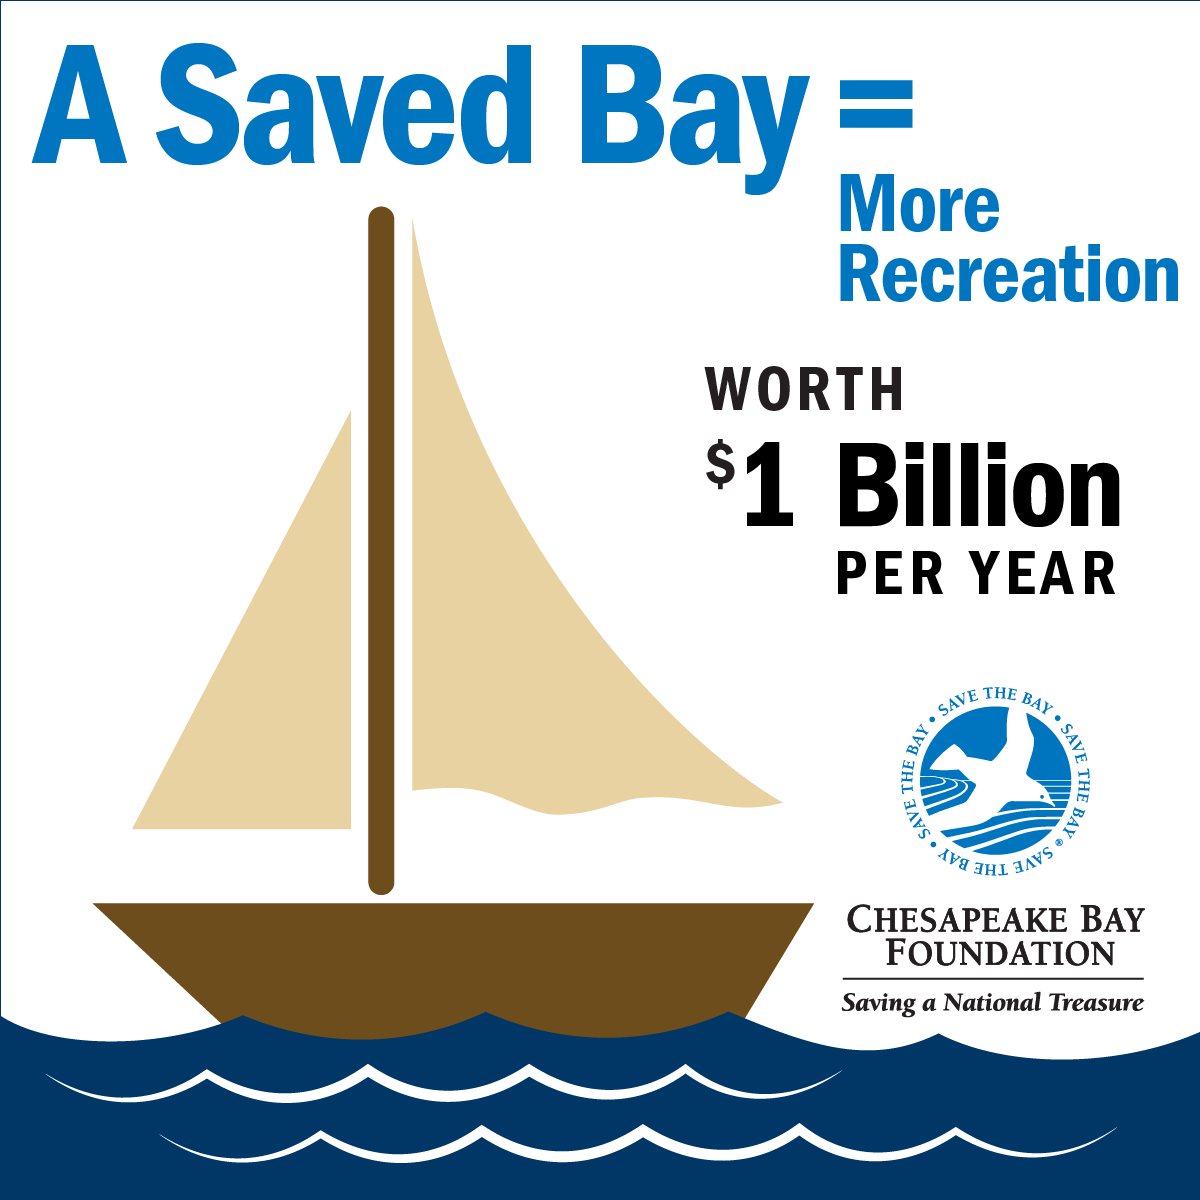 A Save Bay = More Recreation worth $1 Billion per year